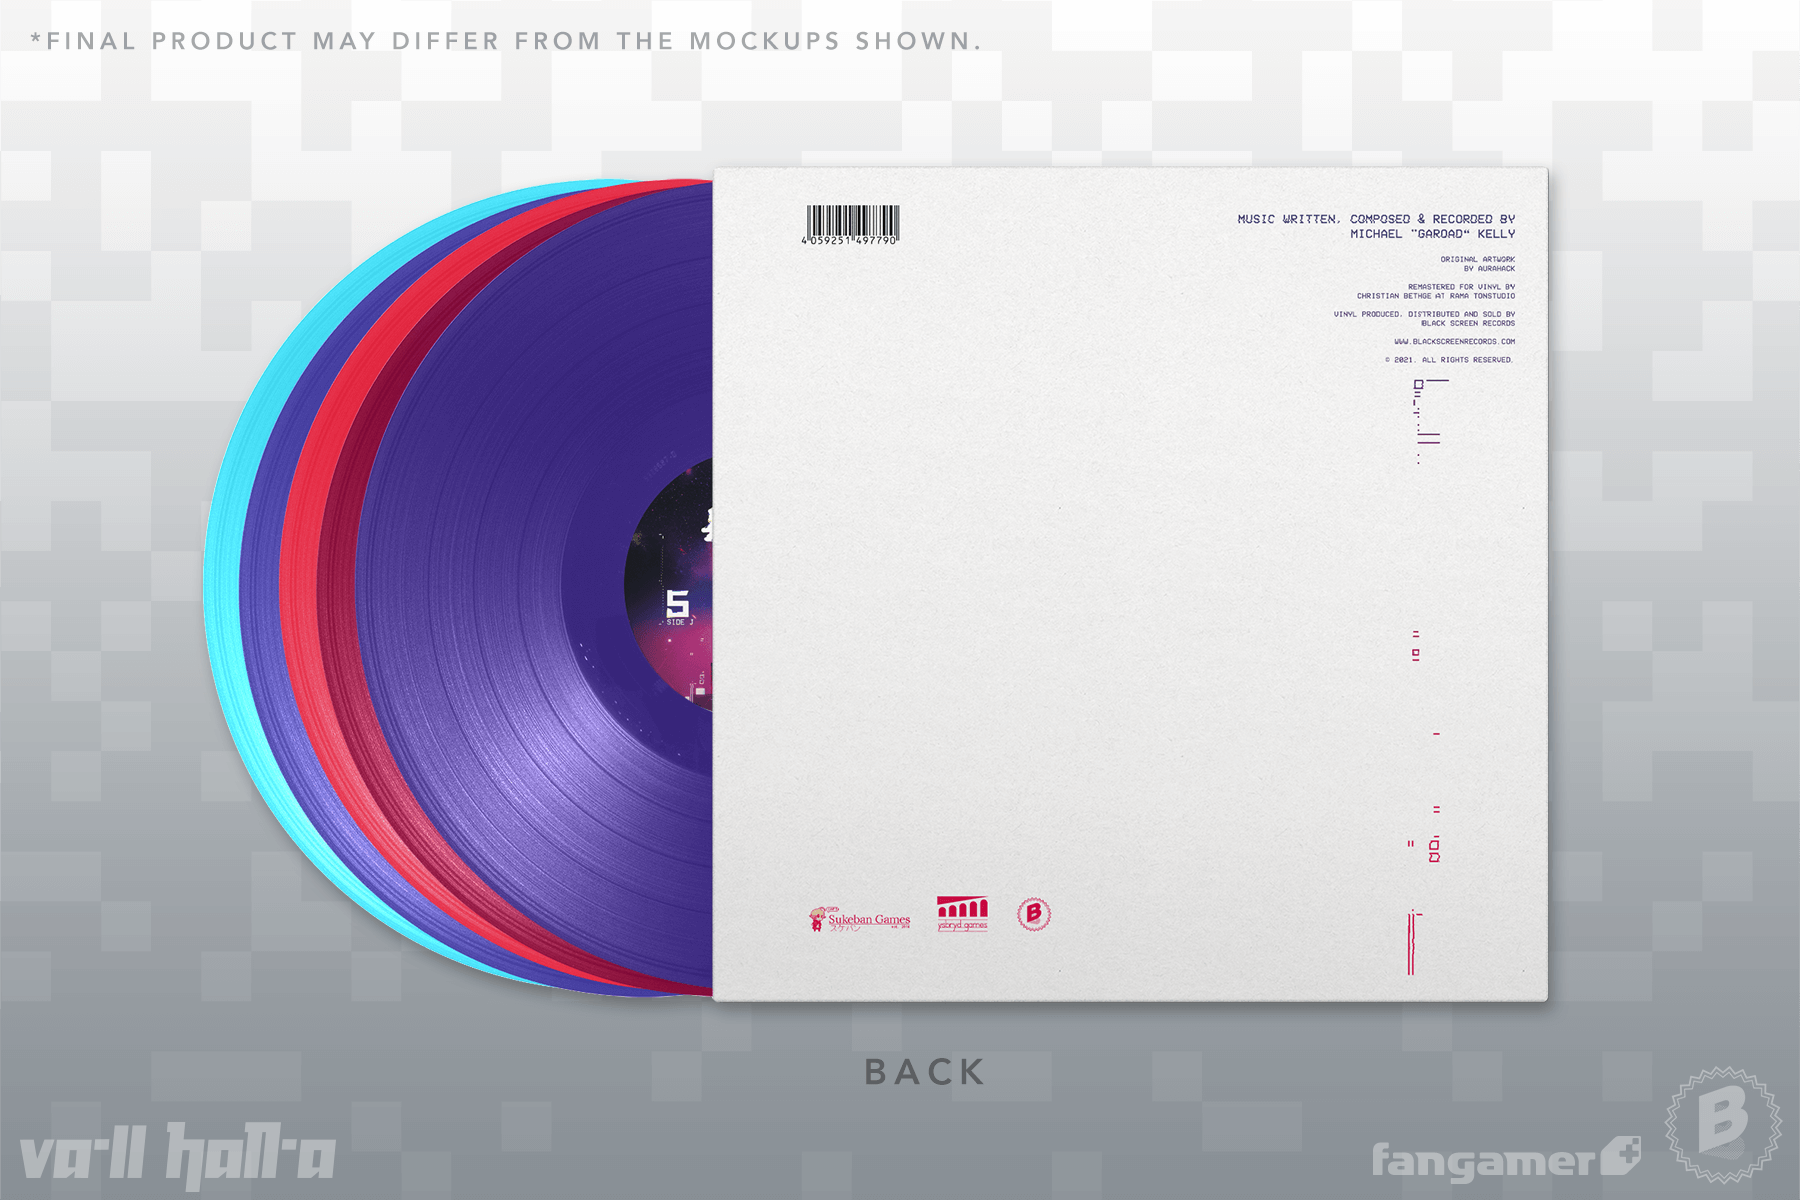 VA-11 HALL-A Complete Sound Collection Vinyl Box Set - Fangamer